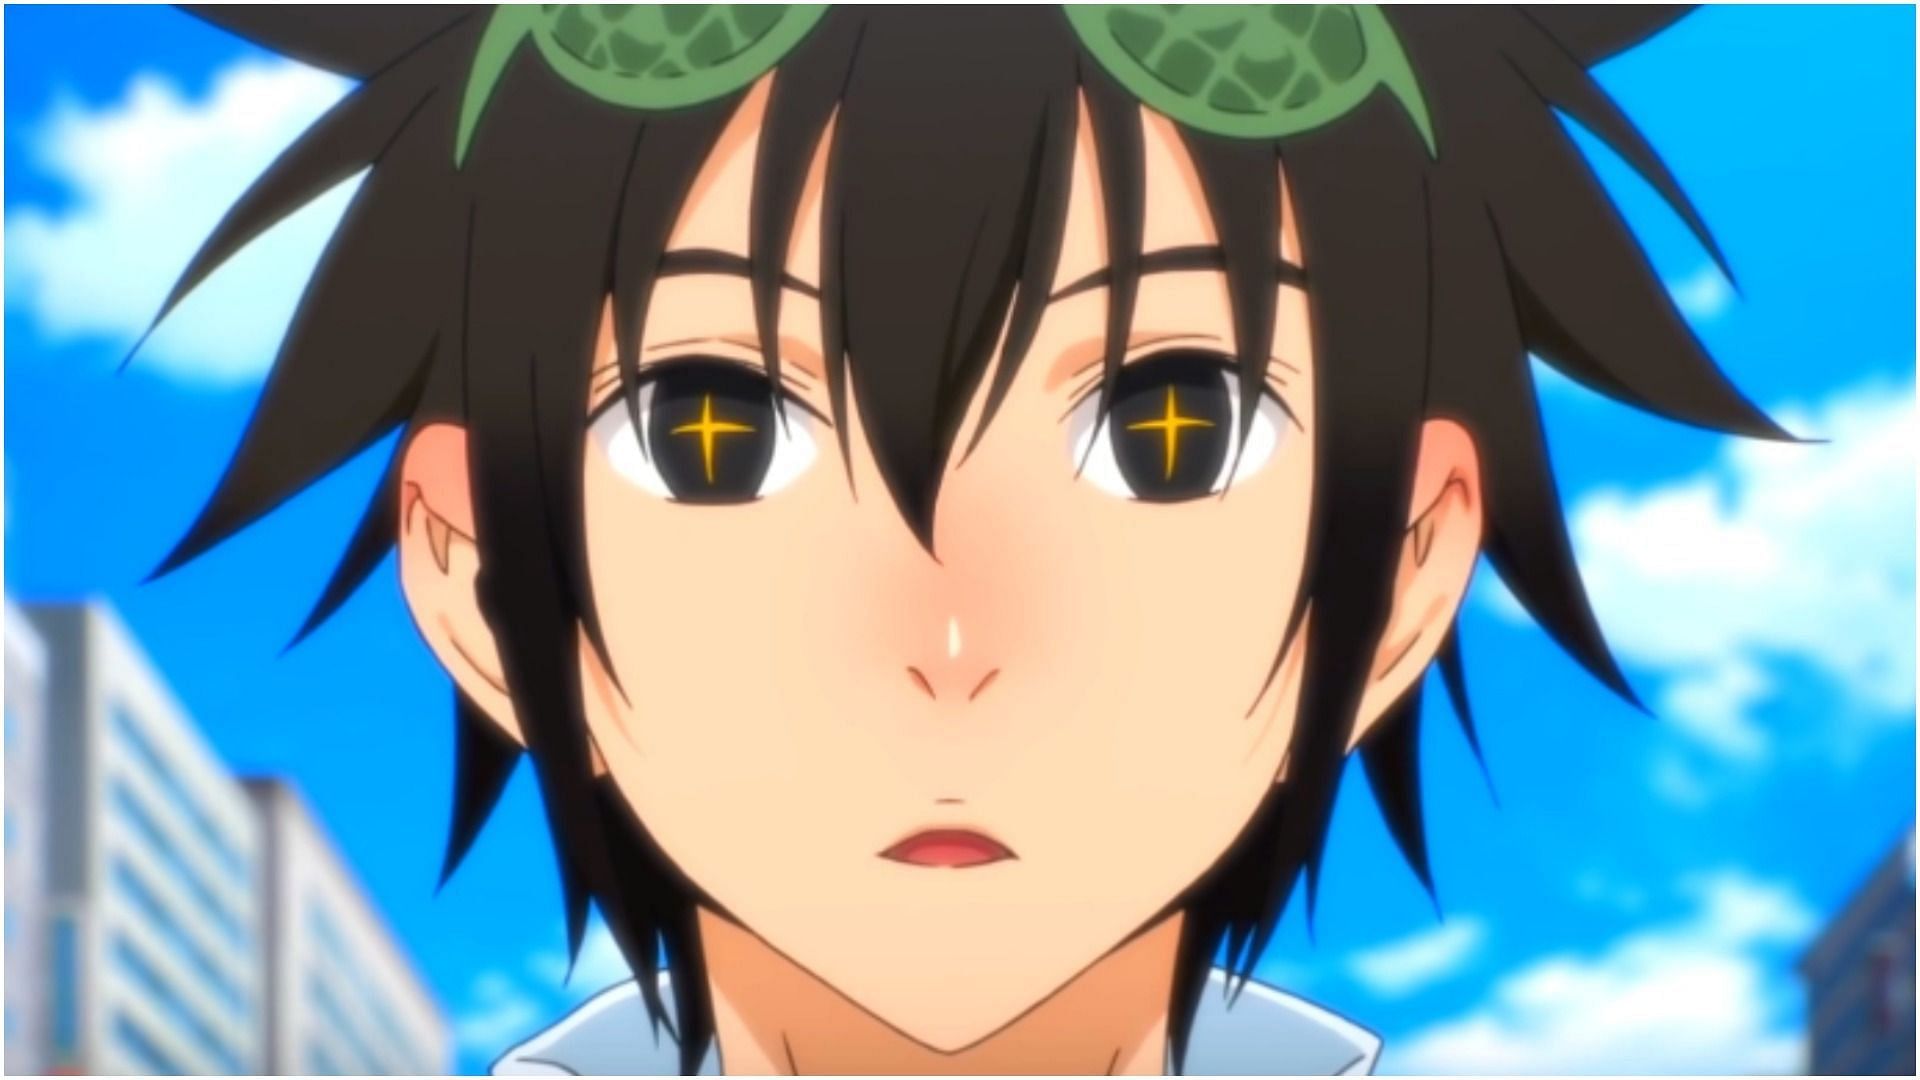 Mori Jin as seen in the anime The God of High School (Image via MAPPA)